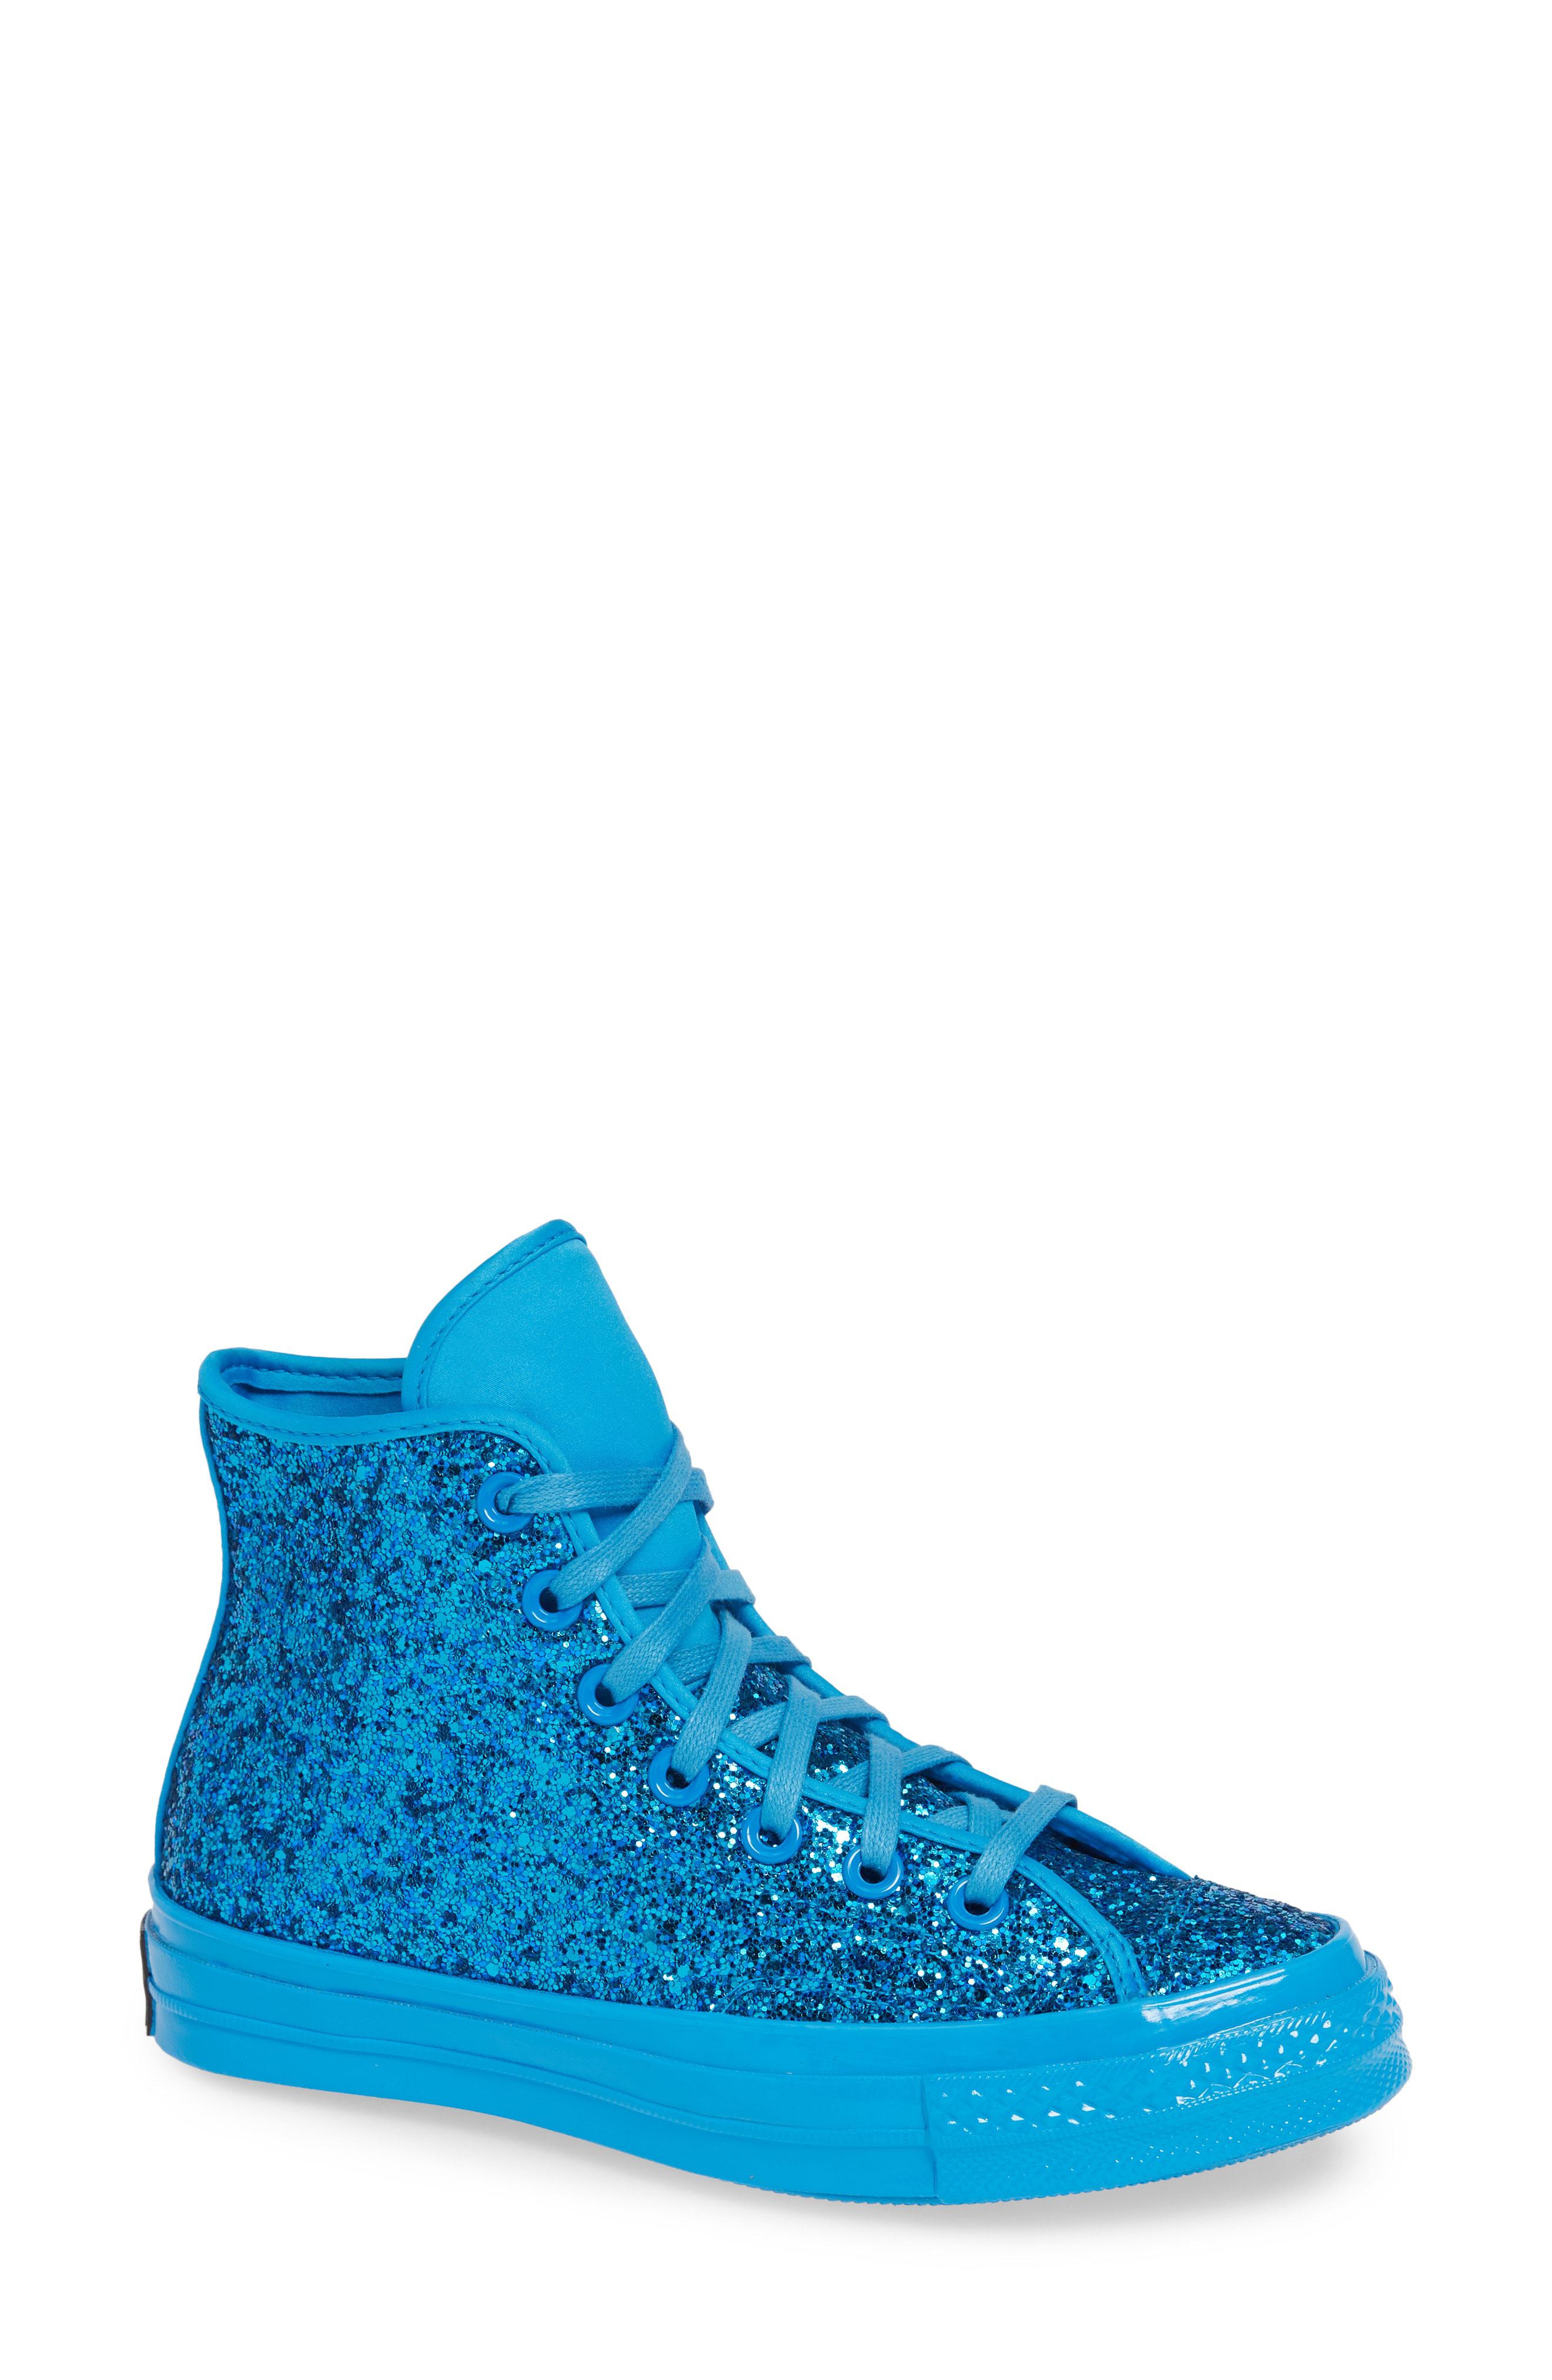 blue glitter high top converse